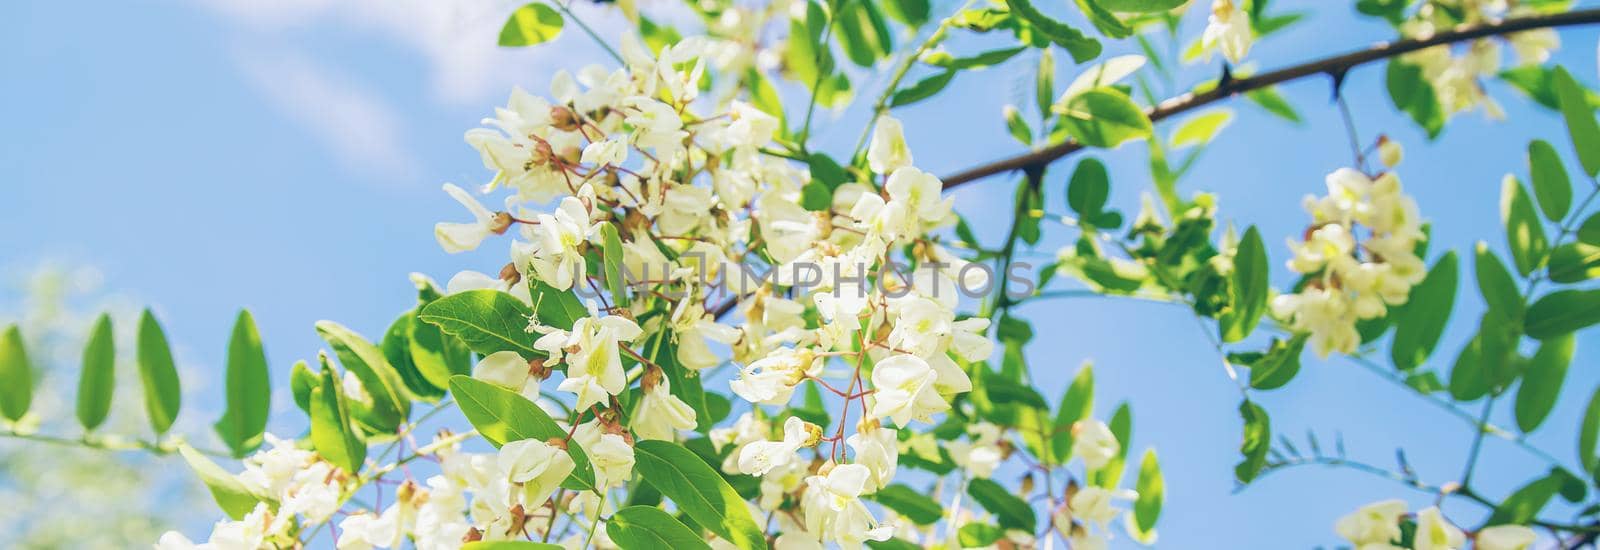 Flowering acacia tree in the garden. Selective focus. by yanadjana